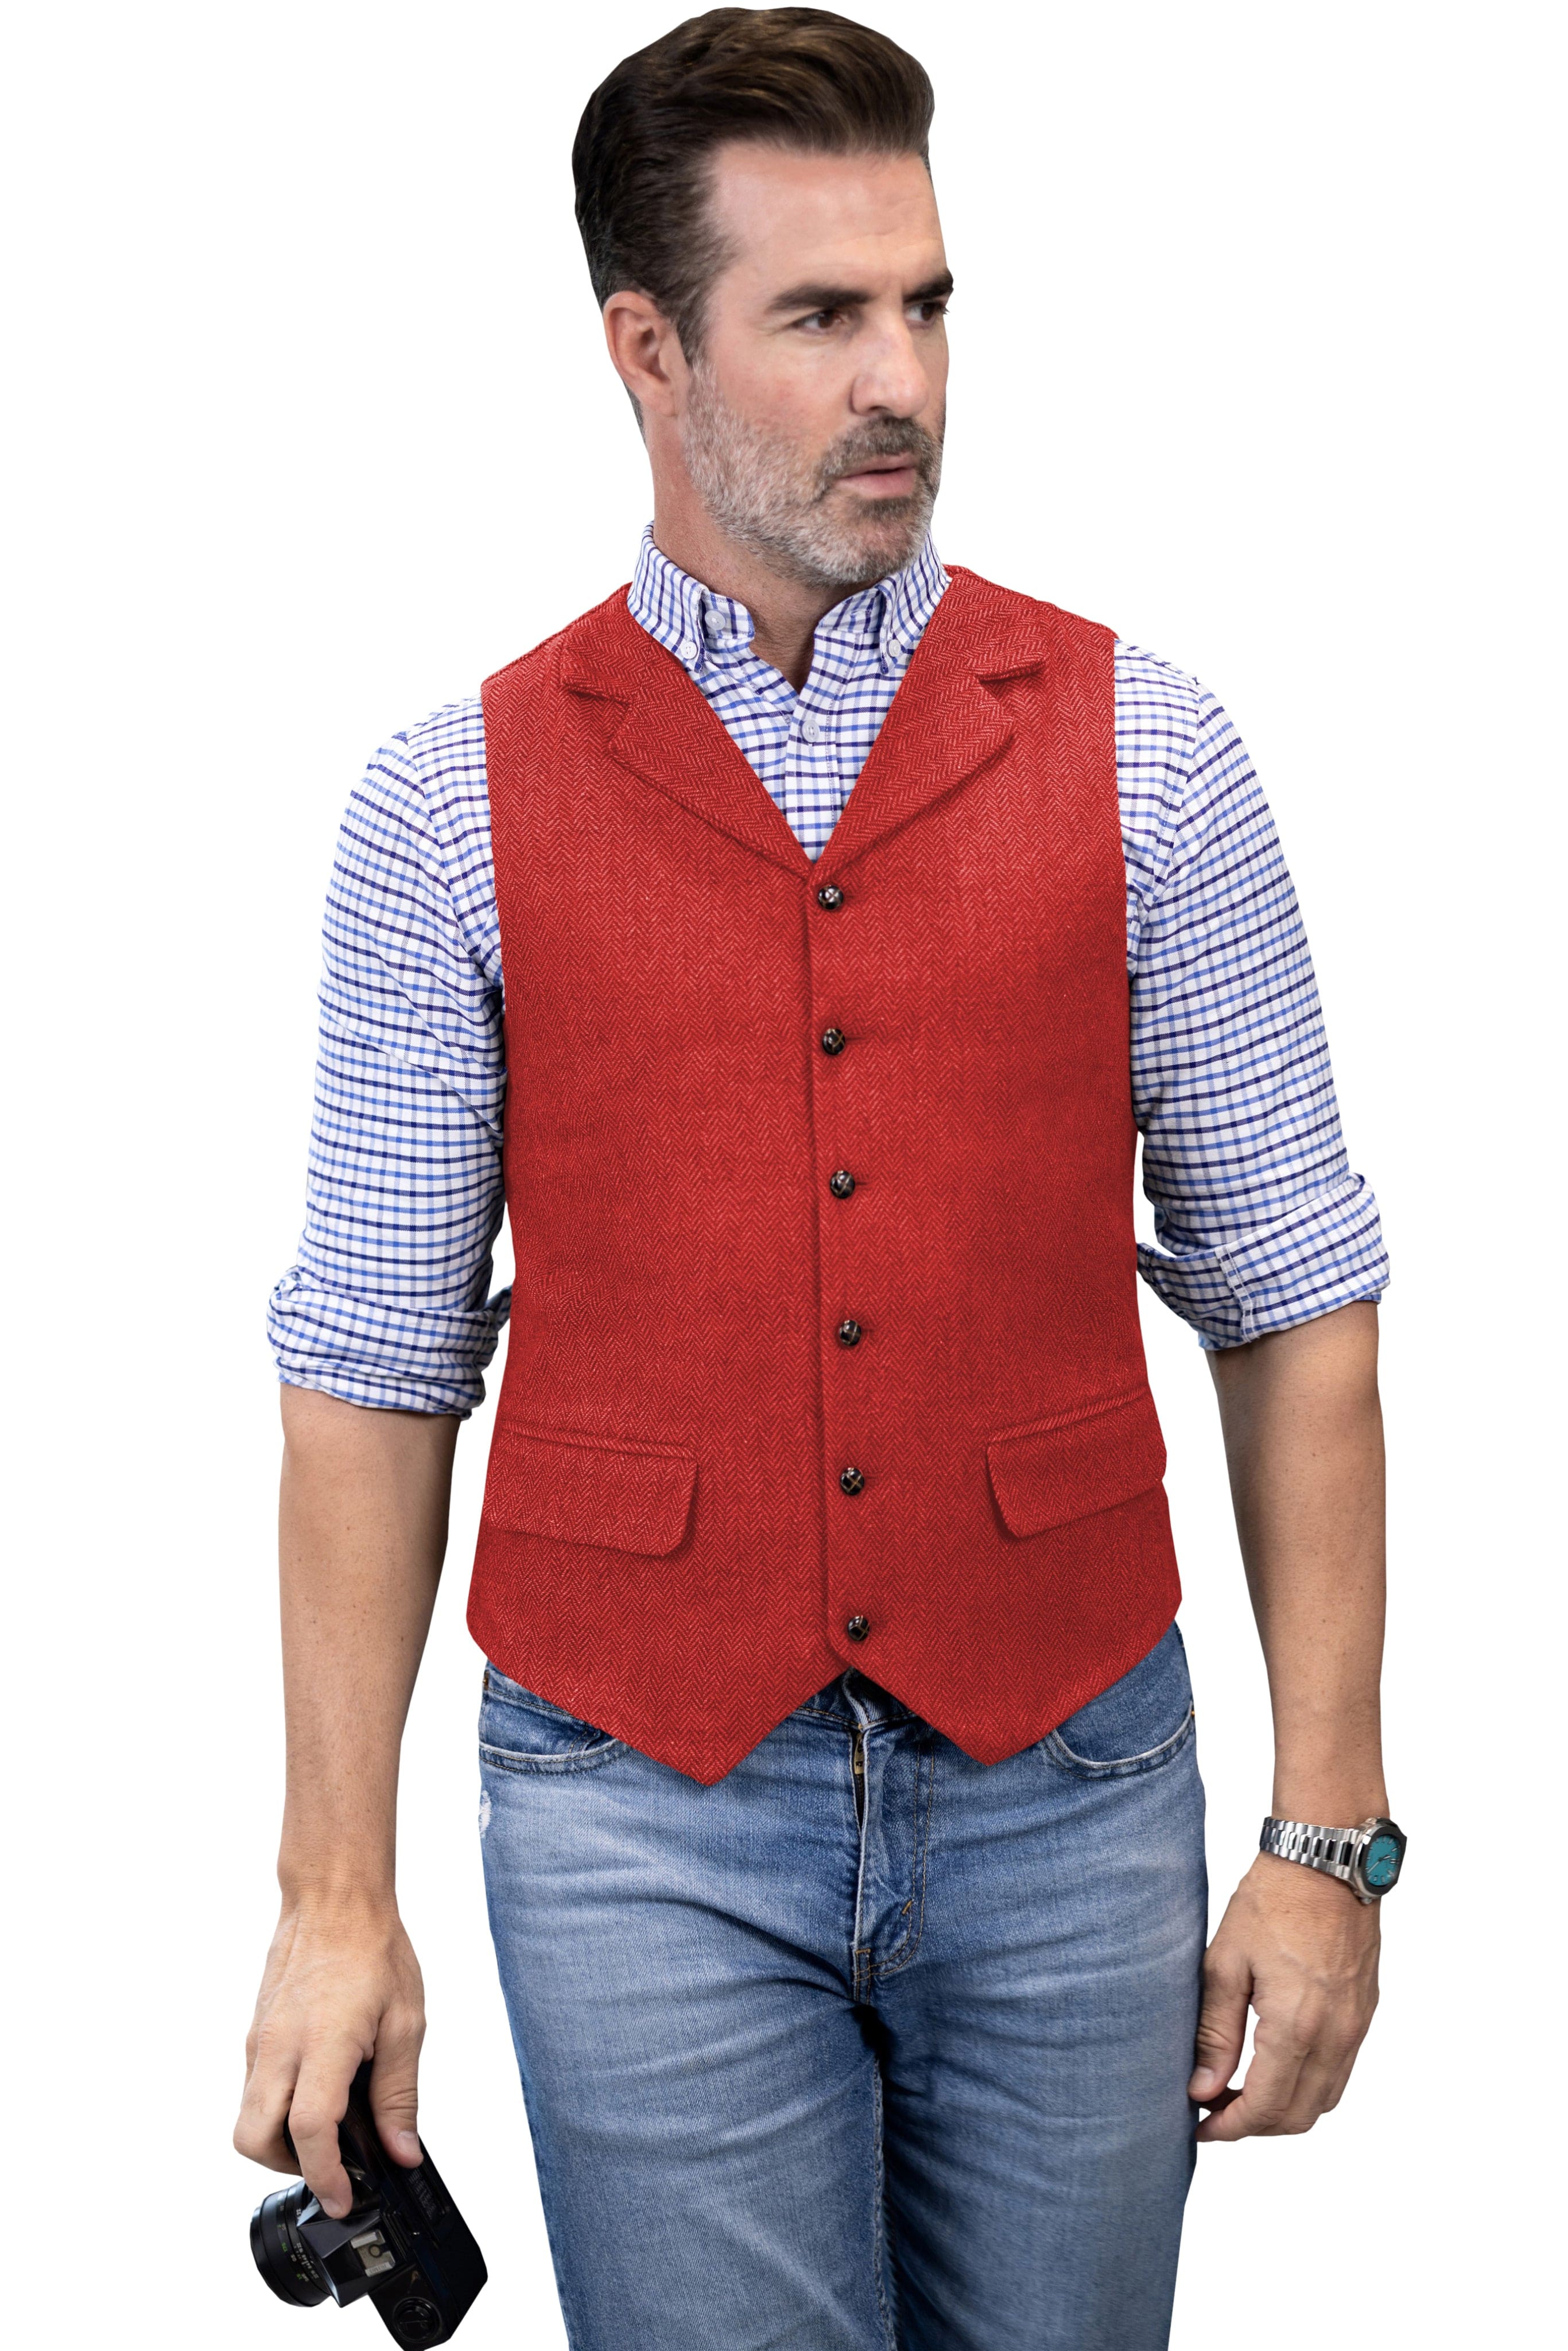 ceehuteey Men's Casual Vest Tweed Herringbone  Notch Lapel Waistcoat